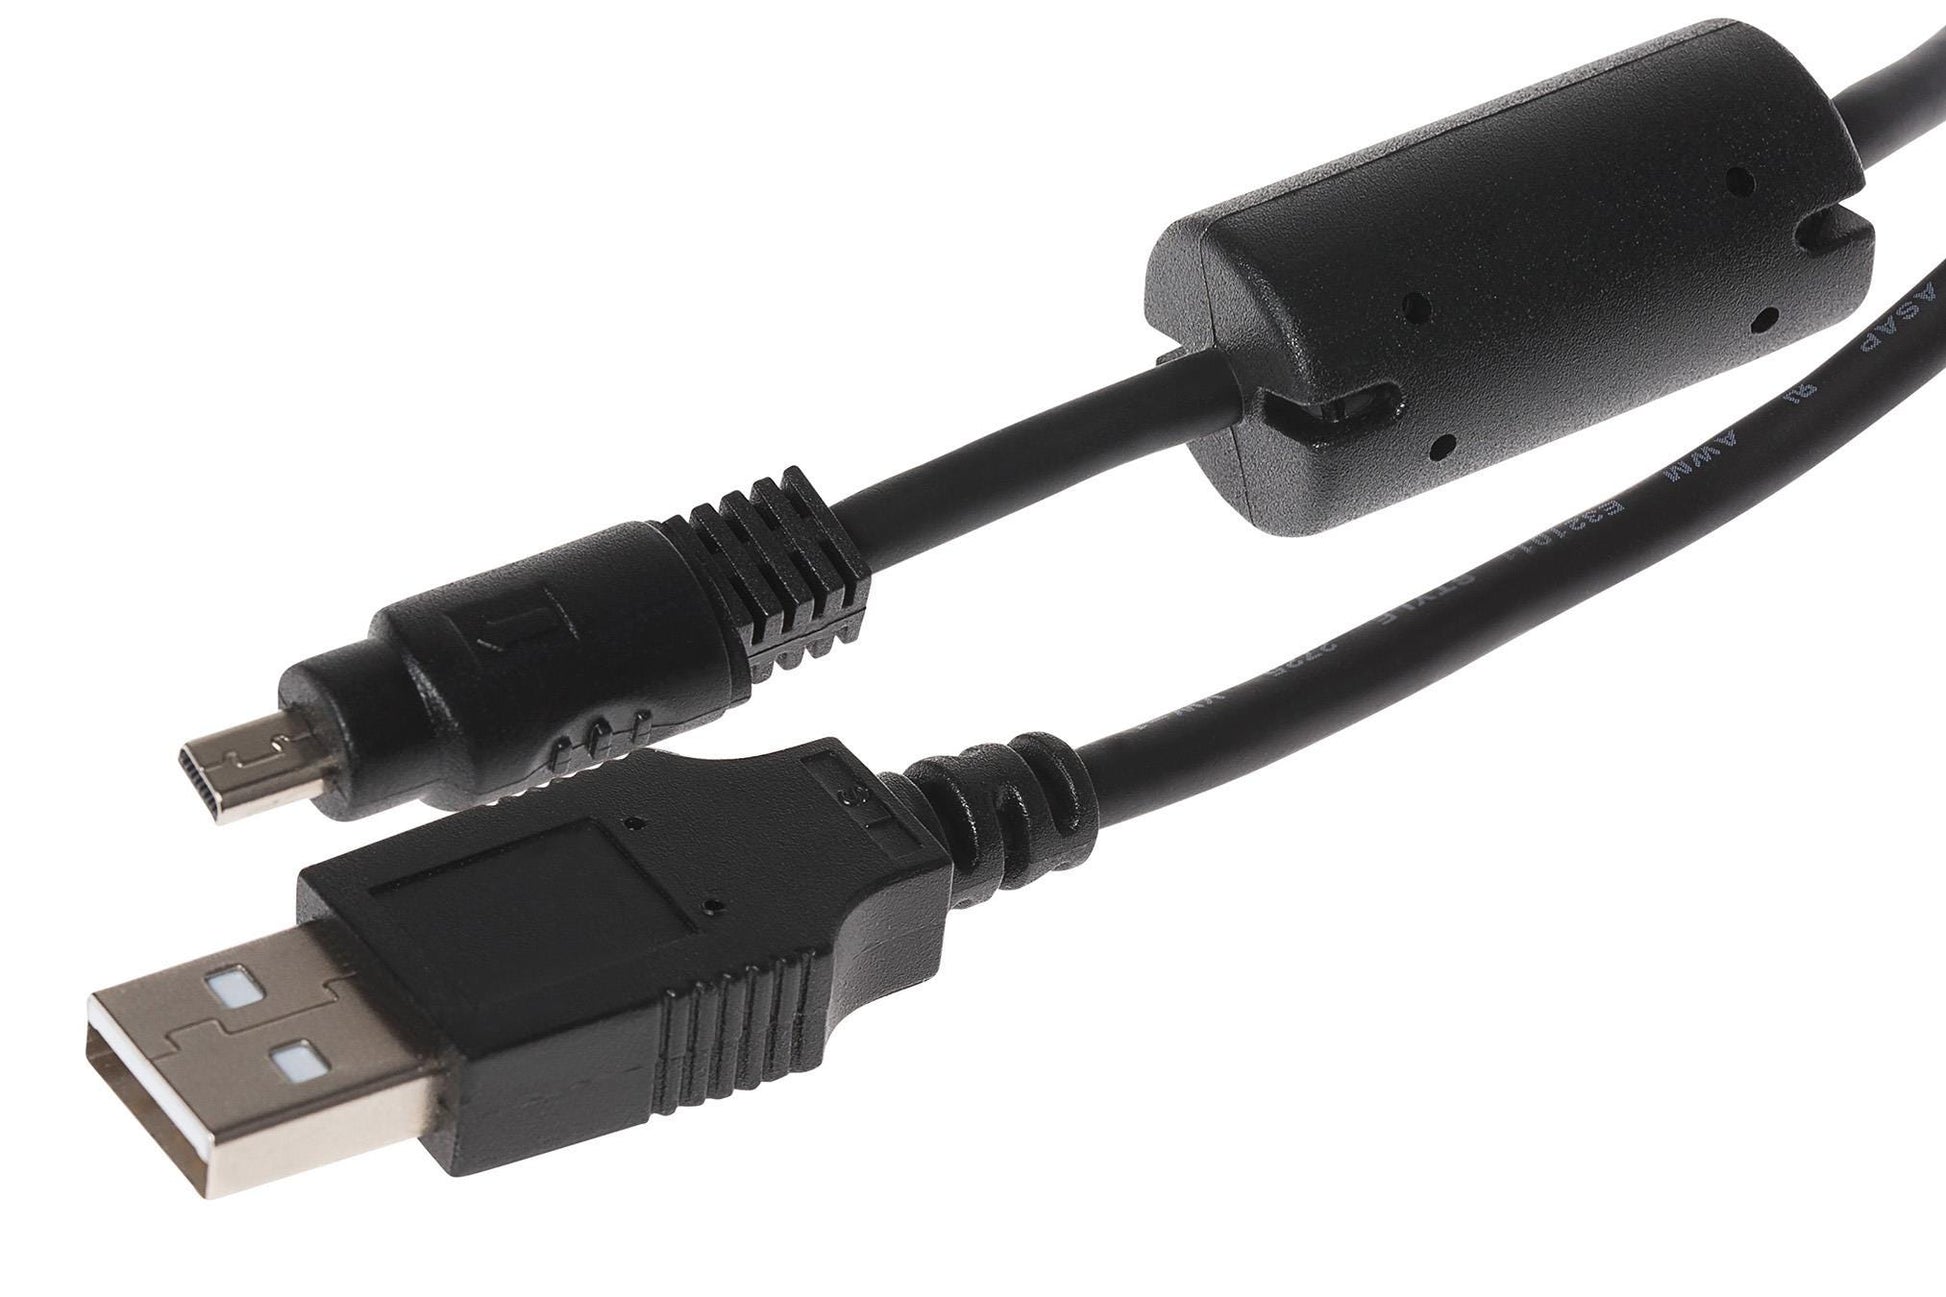 Mini USB Charging Cable - 0.5m - Praktica